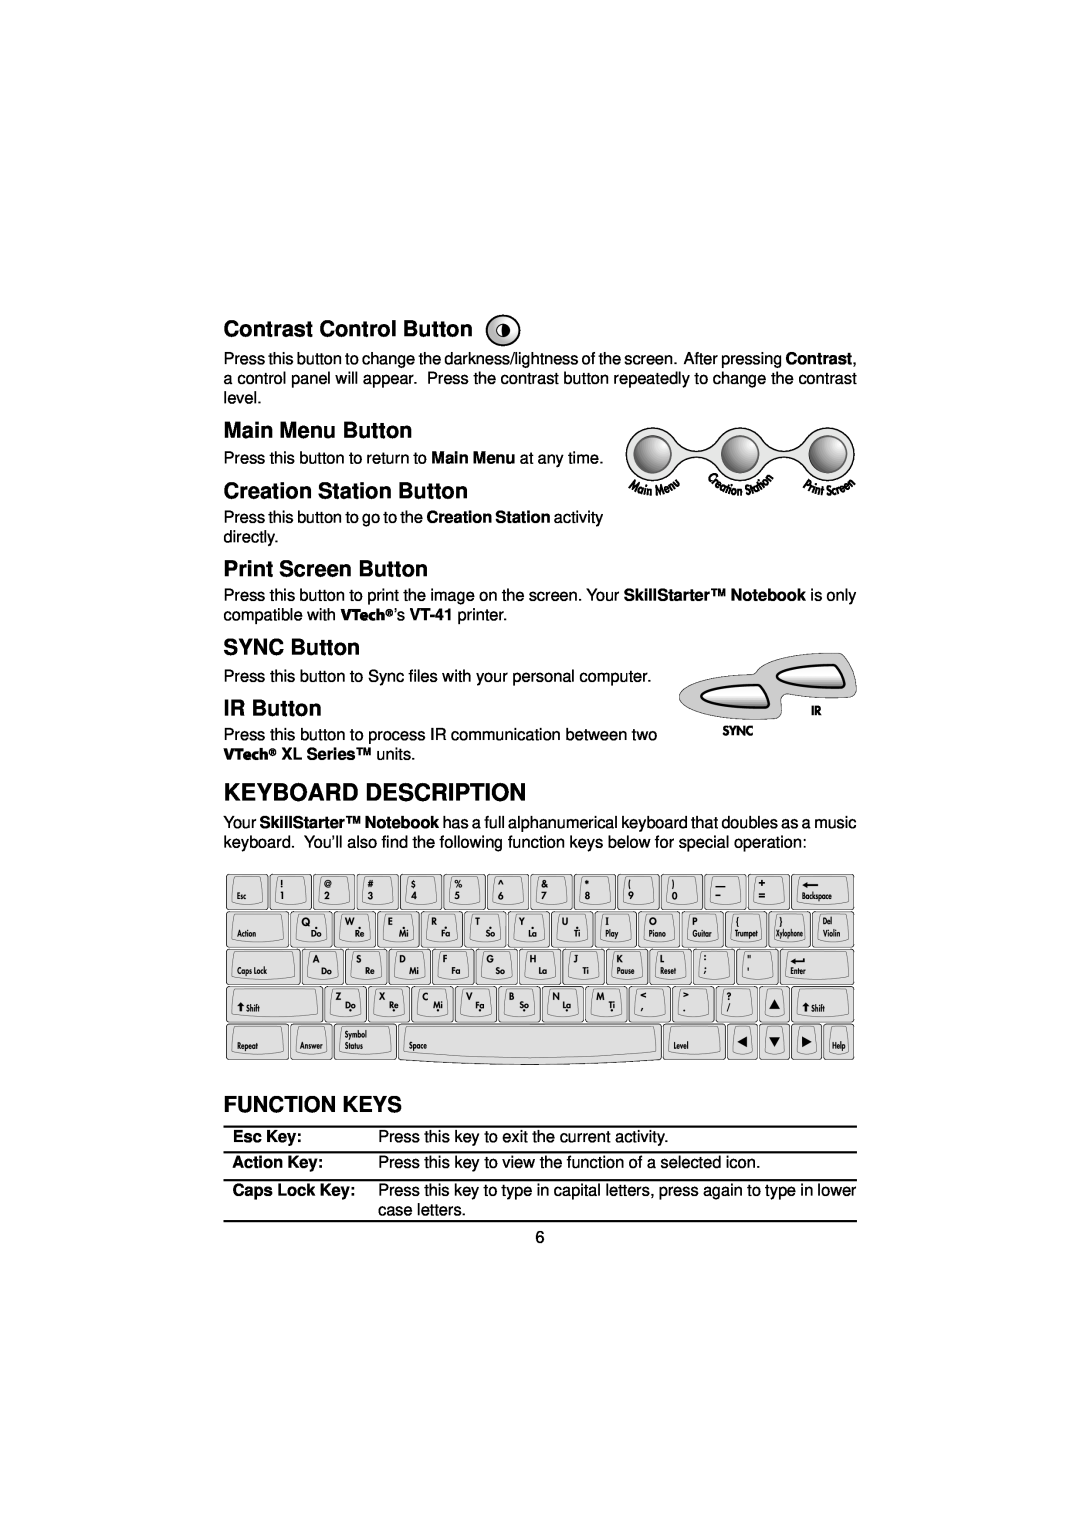 VTech SkillStarter Notebook manual Keyboard Description, Contrast Control Button, Main Menu Button, Creation Station Button 